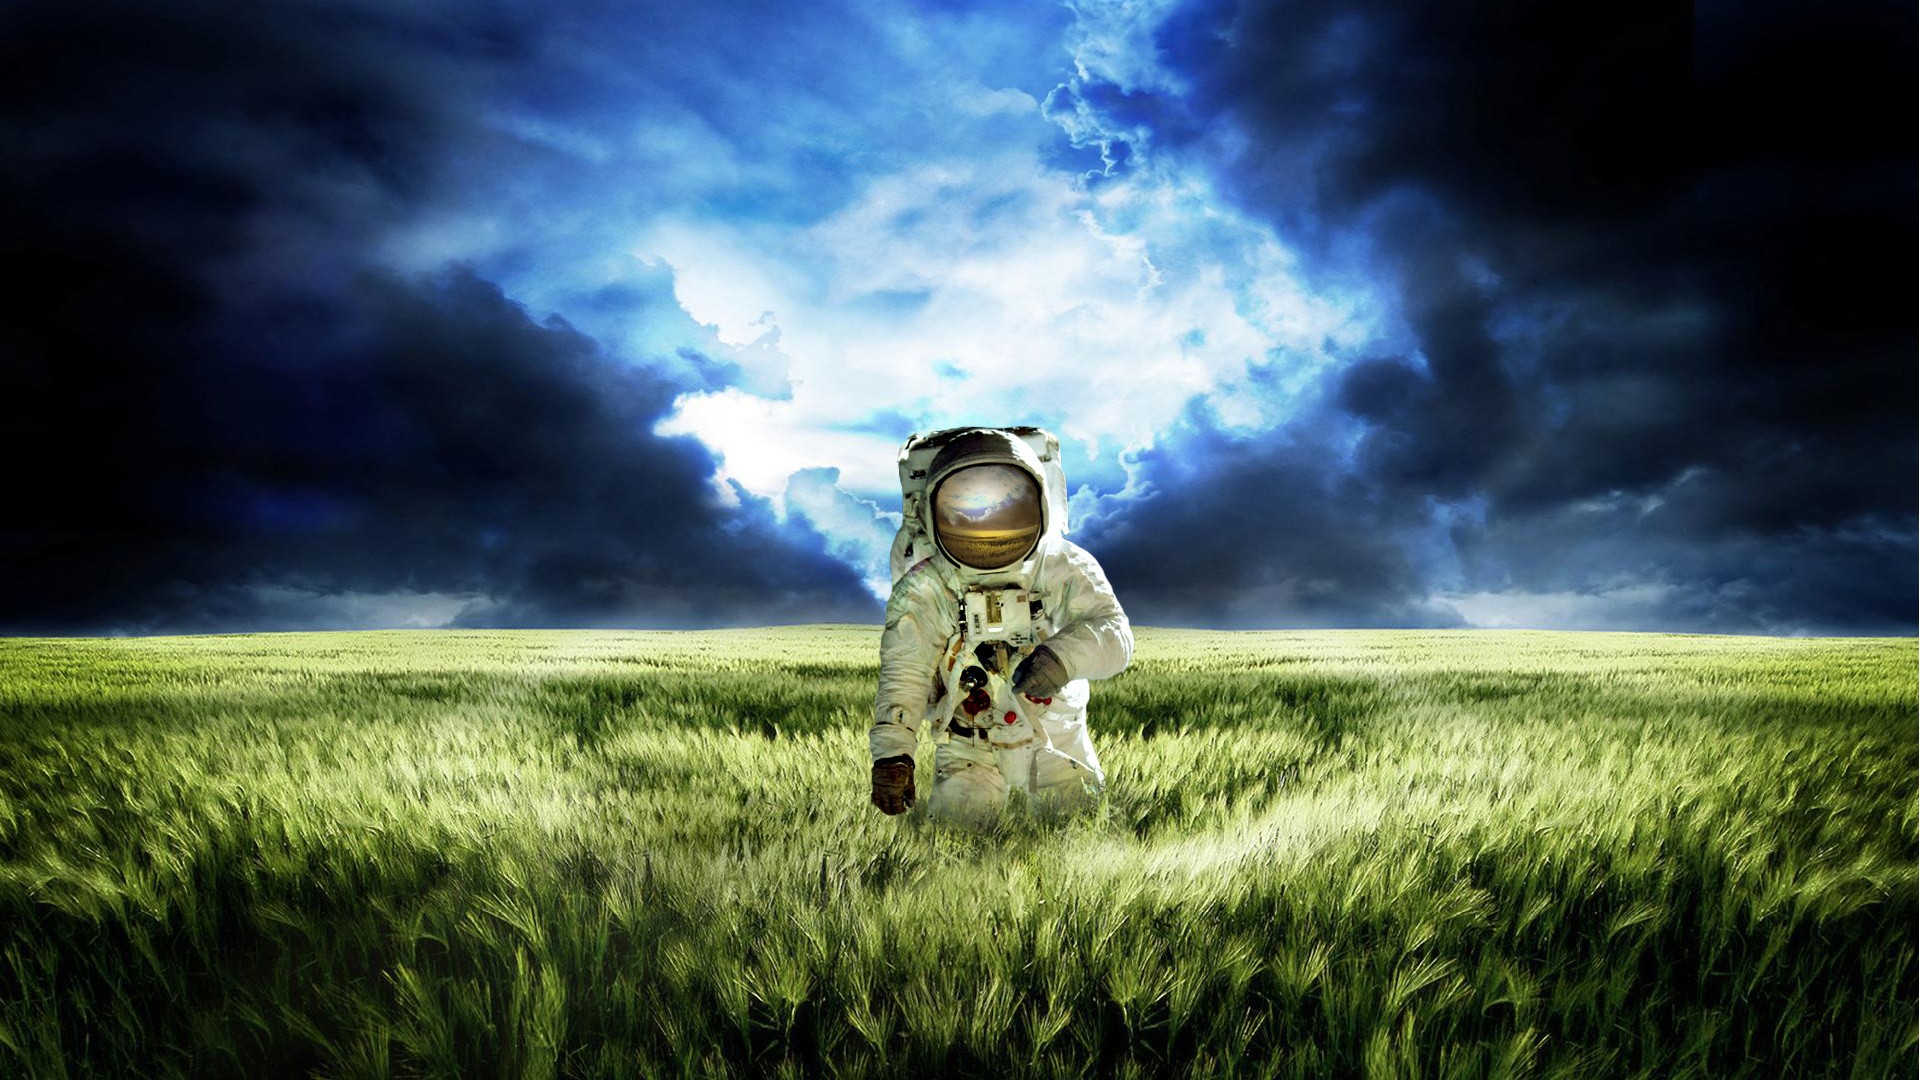 Digital Art Astronaut Helmet Space Suit Nature Field Spikelets Clouds Photo Manipulation Gloves 1920x1080